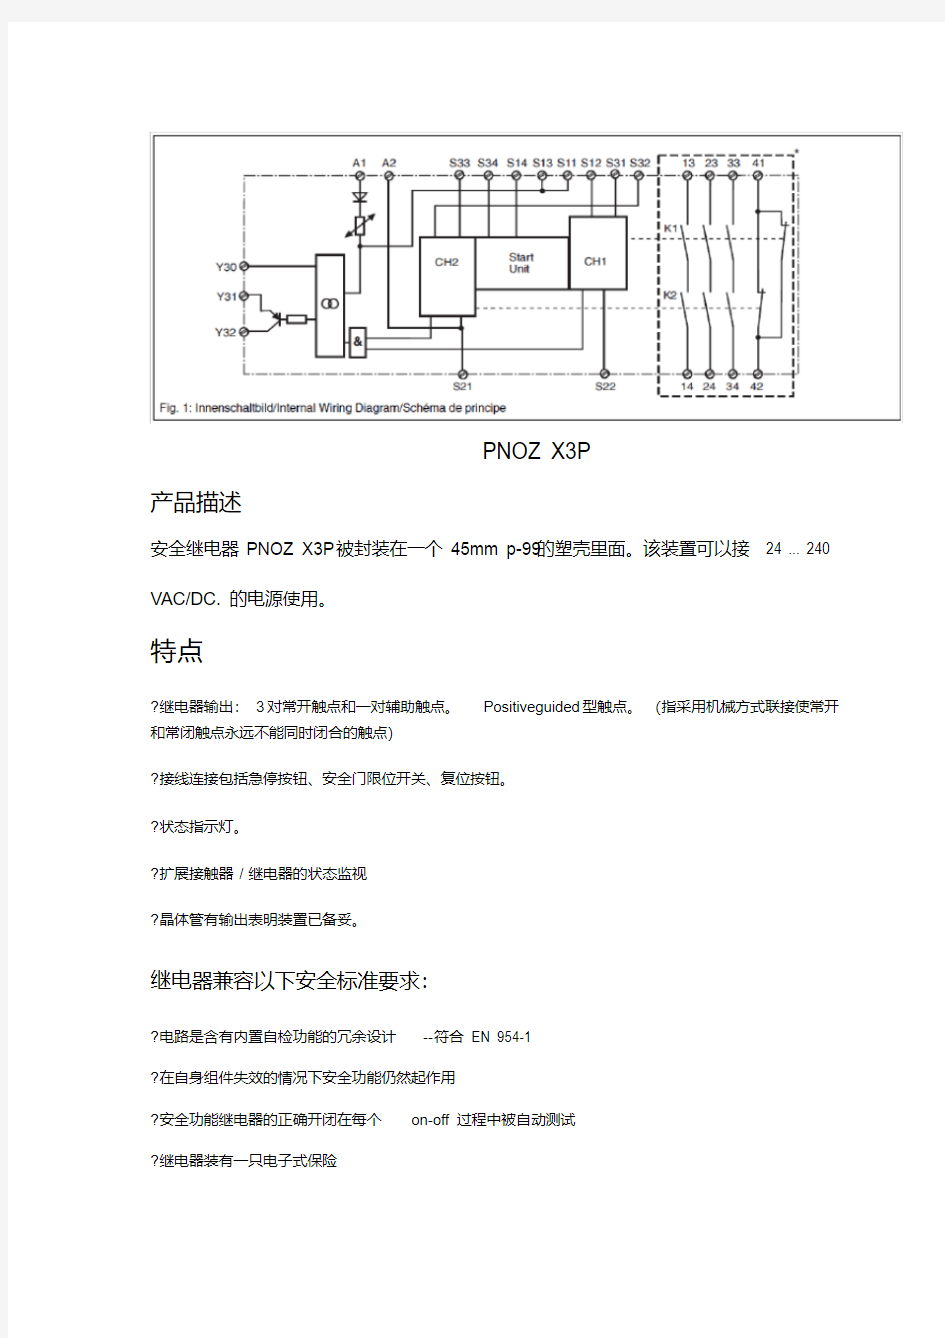  pilz安全继电器PNOZ端子及接线功能描述(中文)